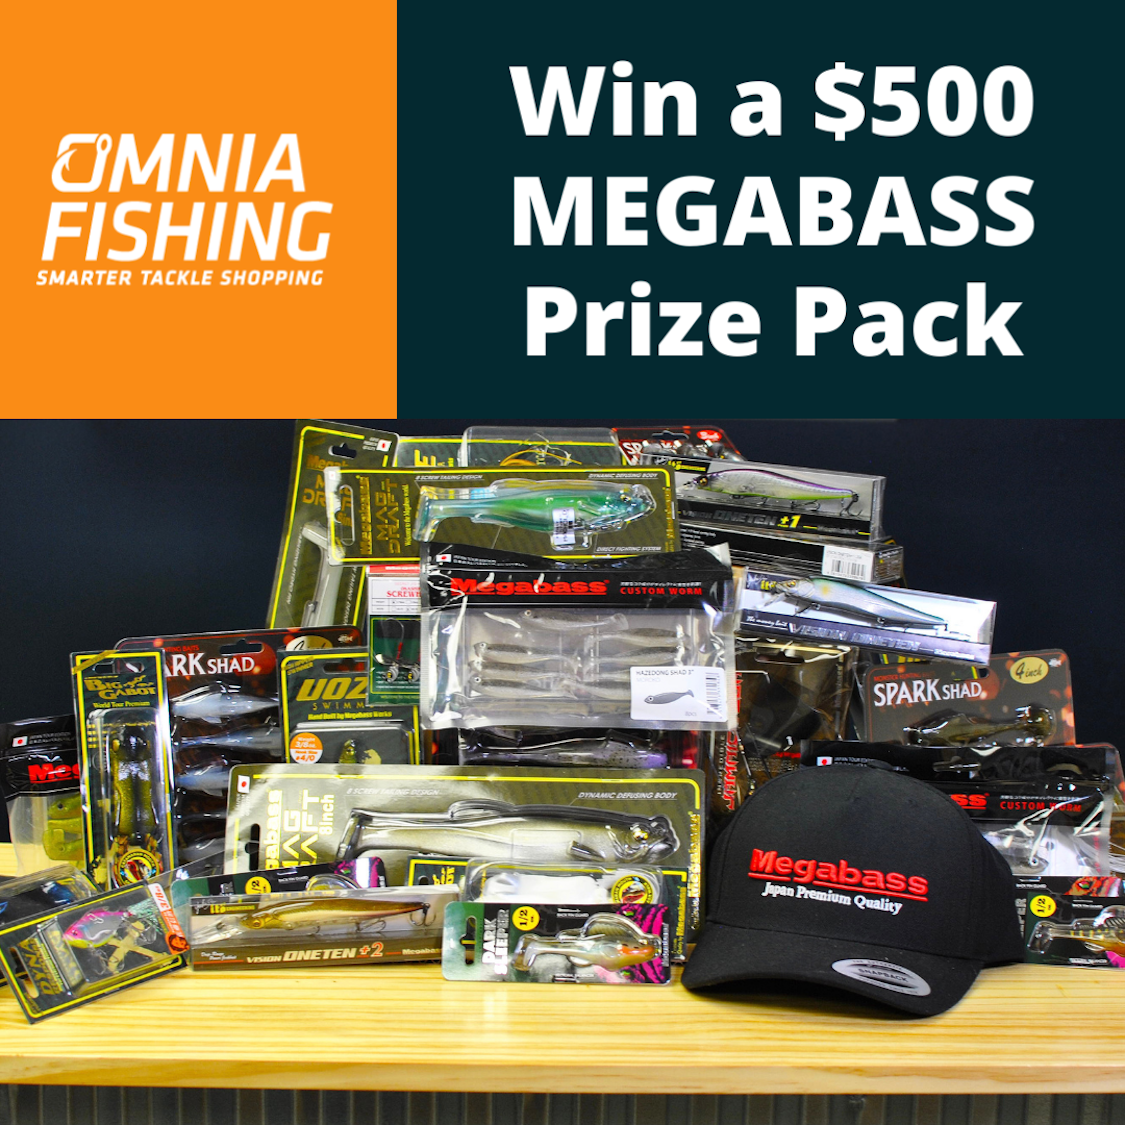 The Ultimate Megabass Prize Pack